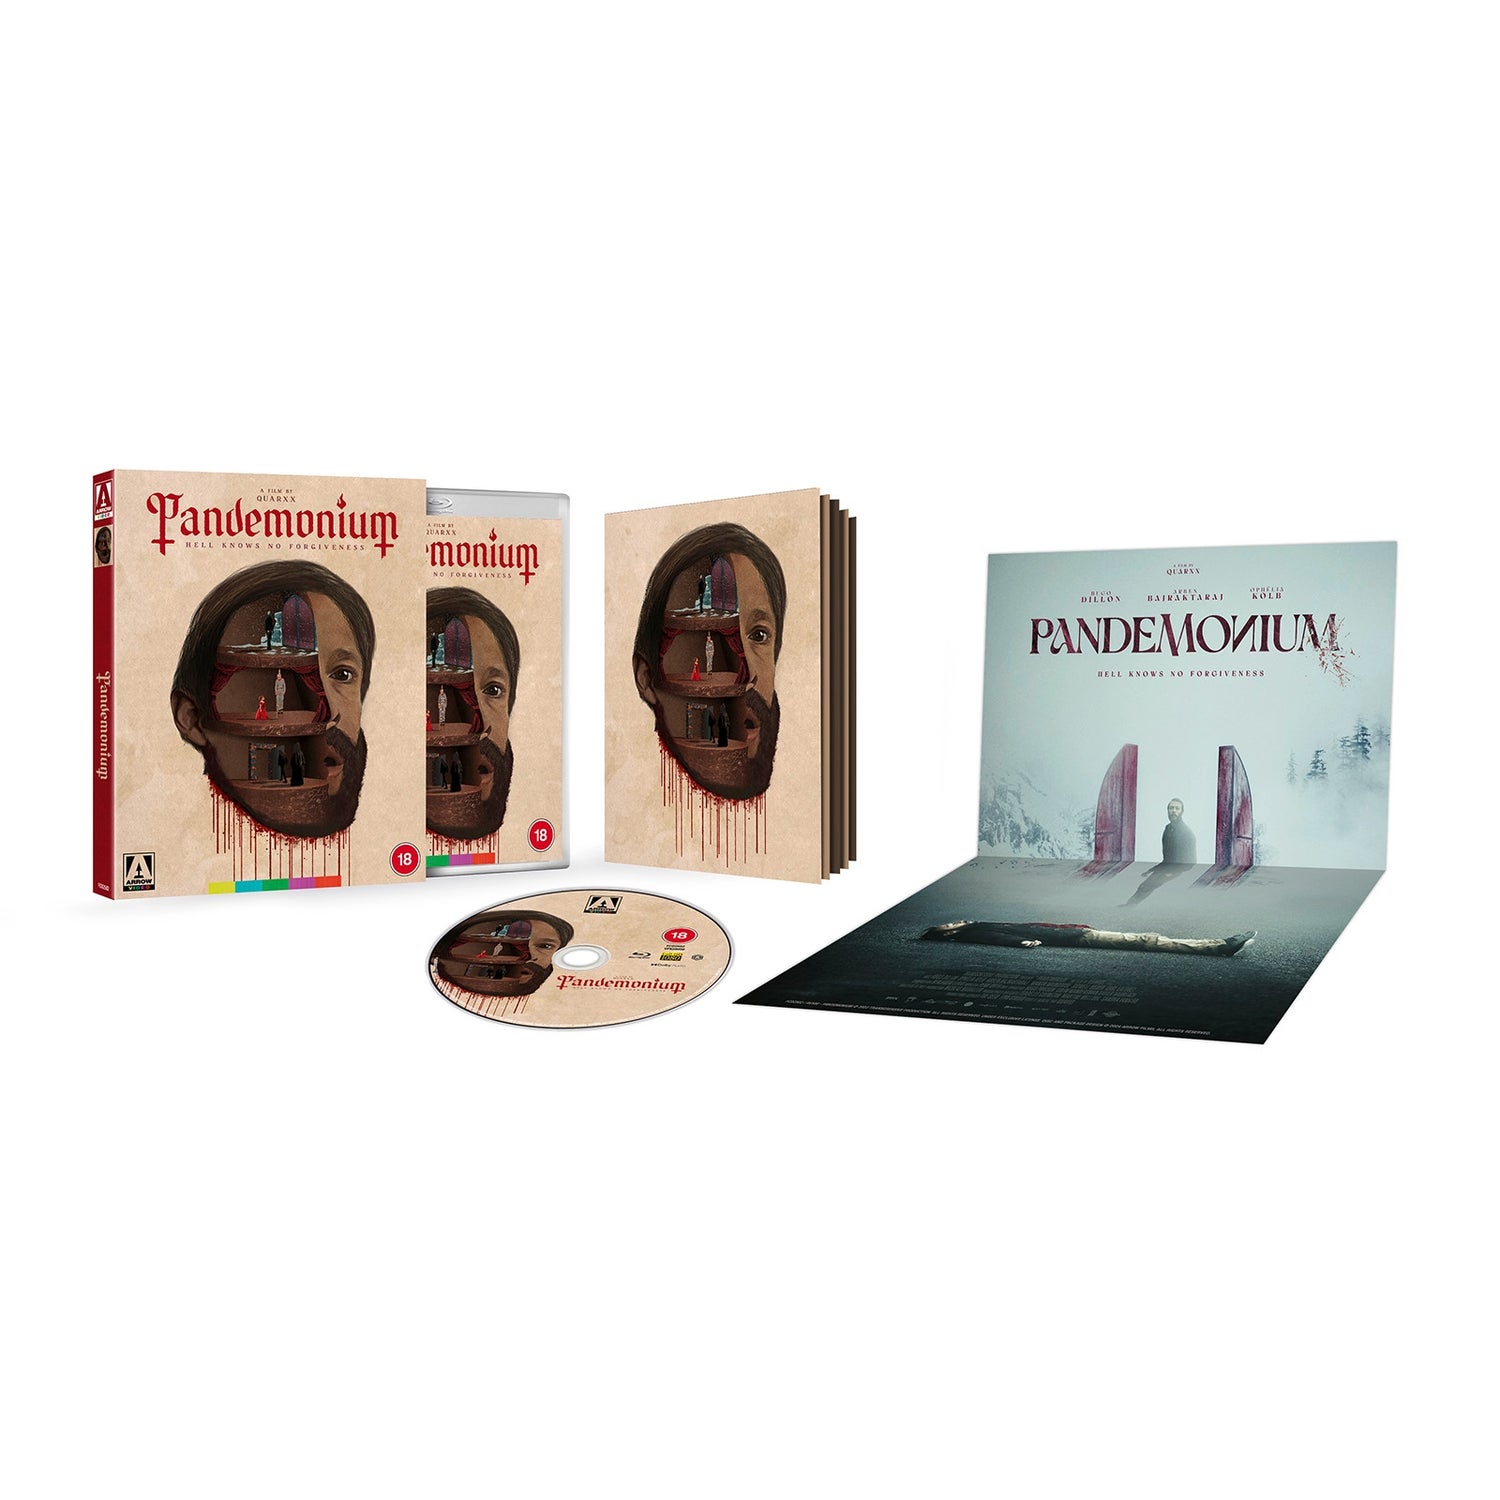 Pandemonium Limited Edition